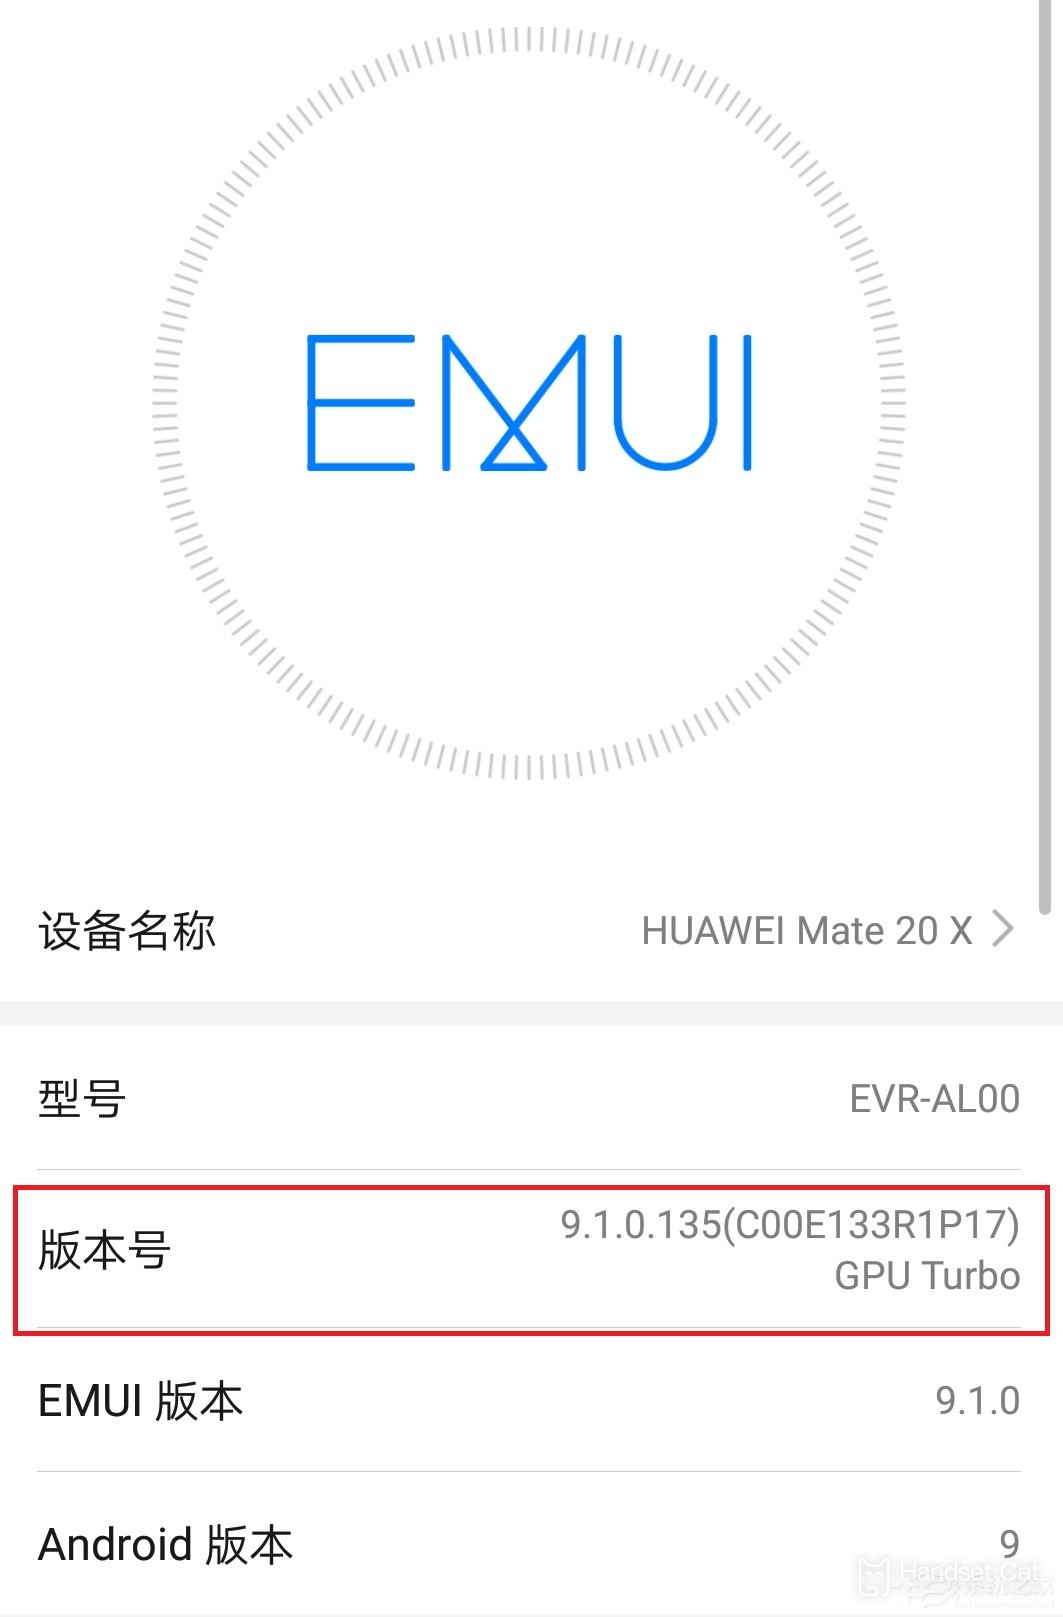 Huawei Enjoy 50 Pro에서 개발자 모드 진입에 대한 튜토리얼